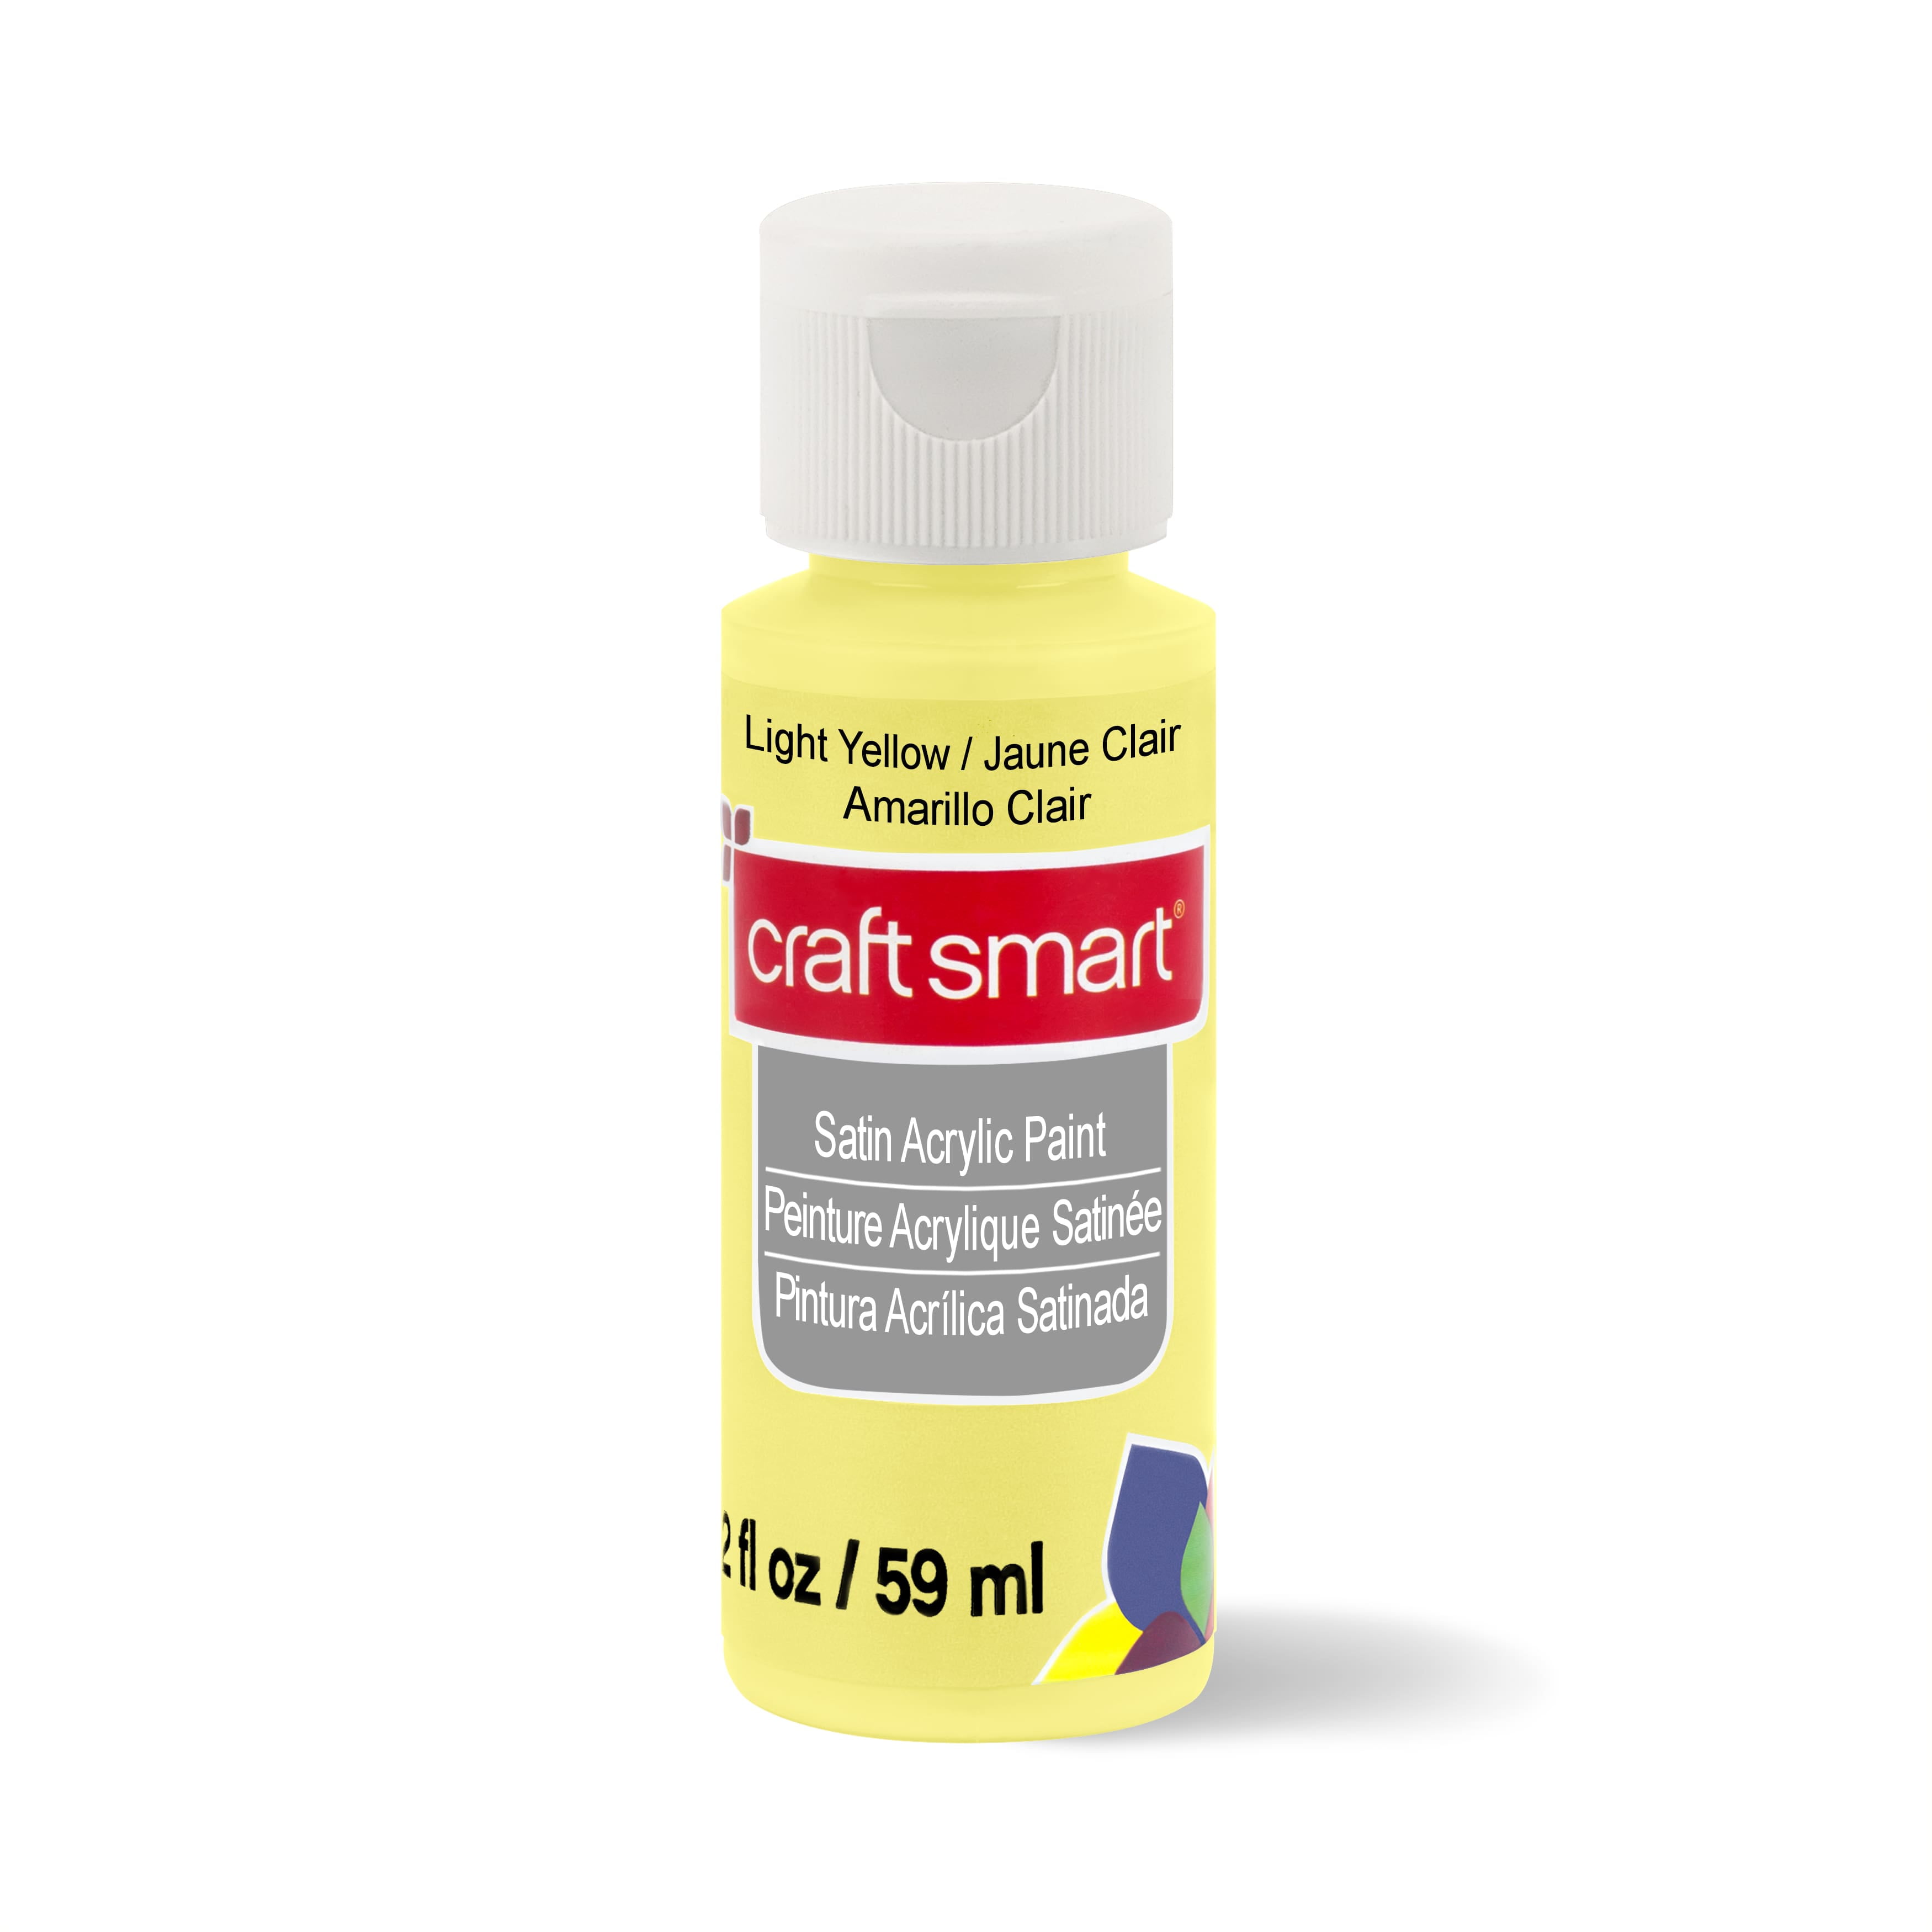 Bright Multi-Surface Premium Satin Acrylic Set by Craft Smart